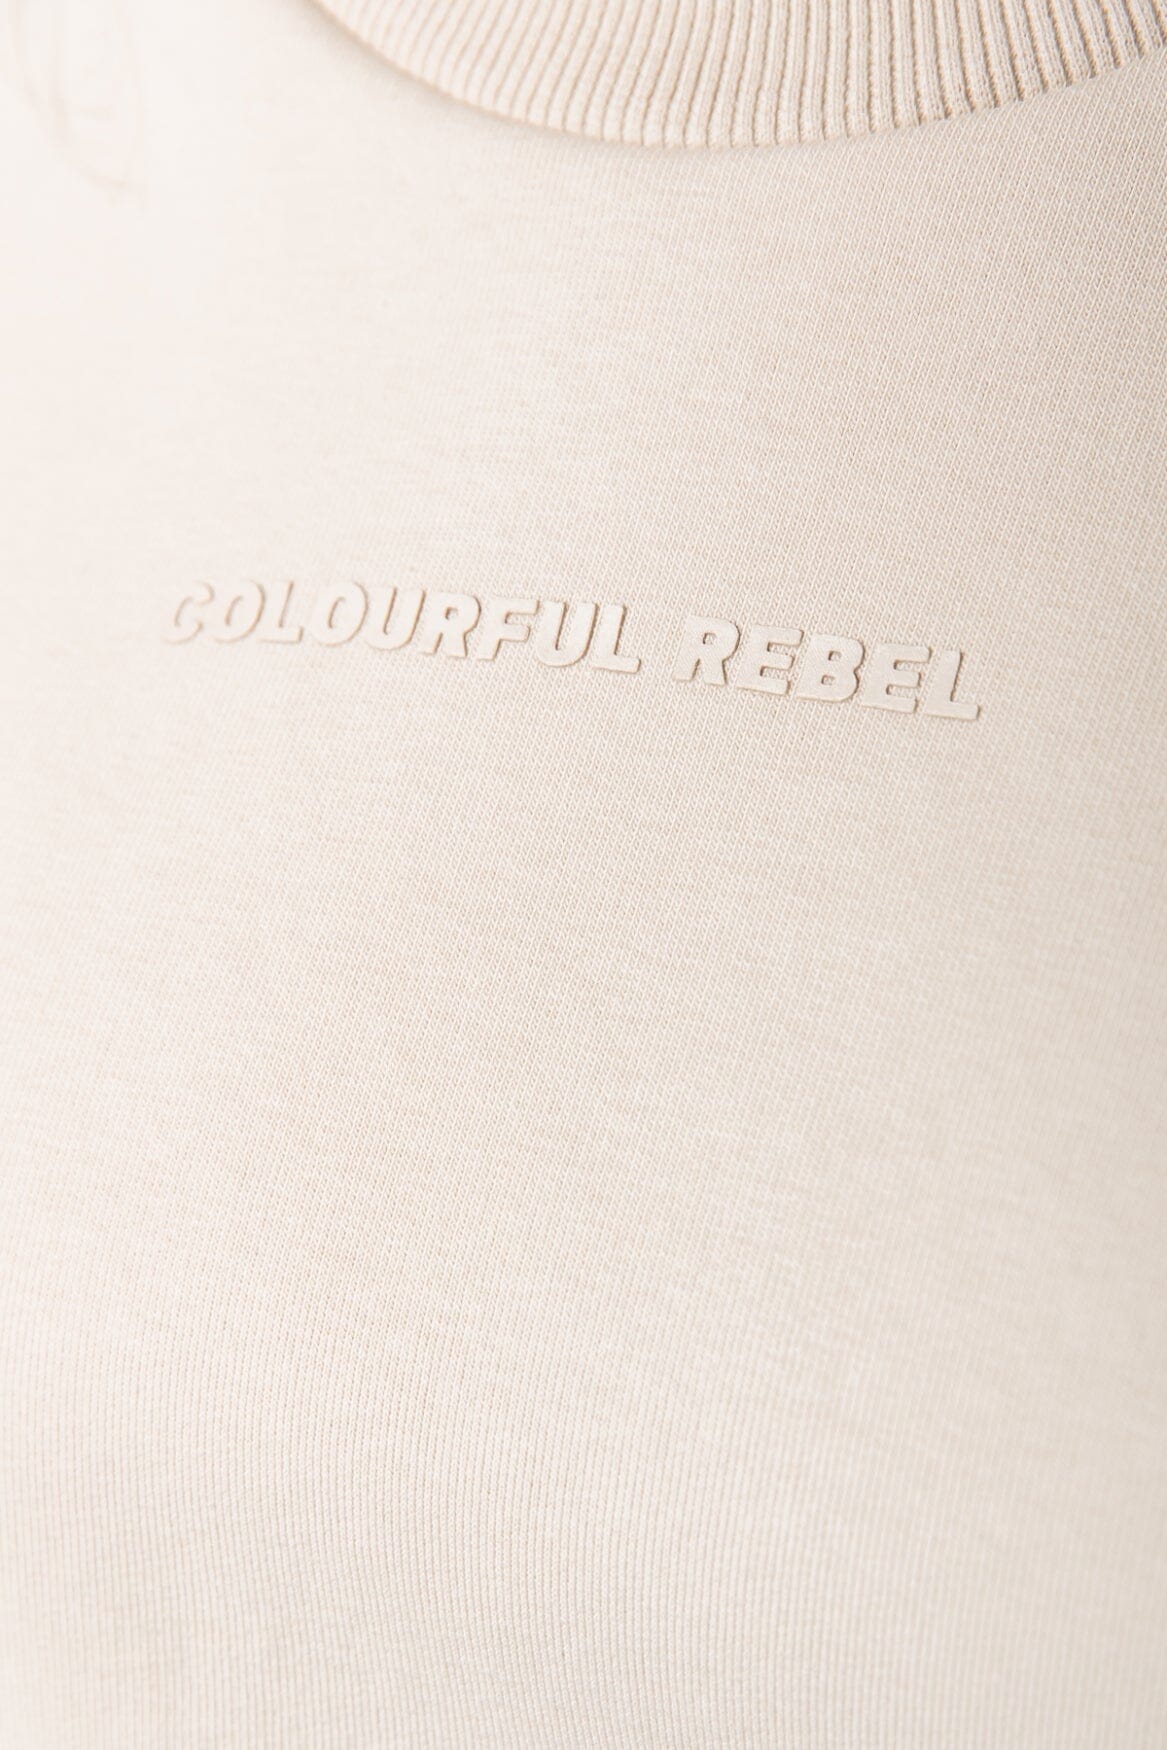 Colourful Rebel Logo Relaxed Sweat | Smoke 